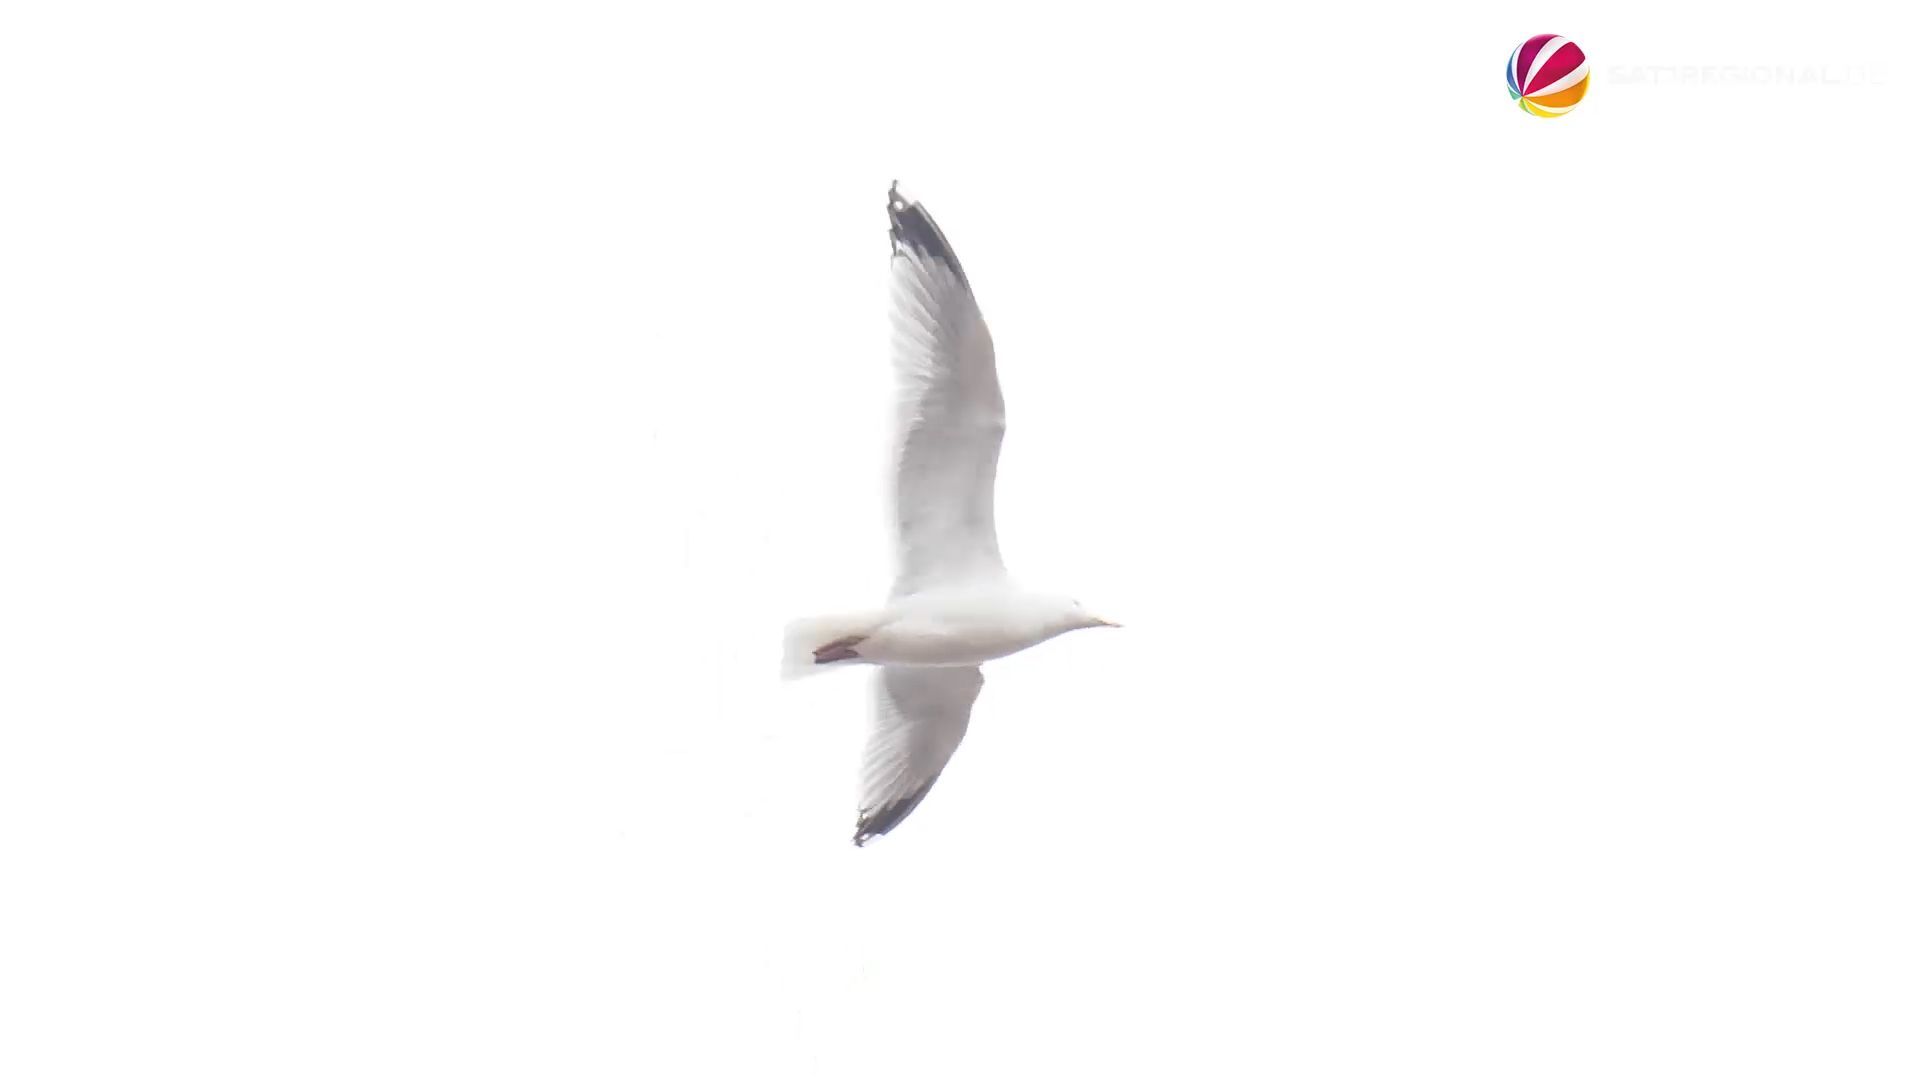 Seagulls: Sonderburg on the Flensburg Fjord allows hunters to shoot them